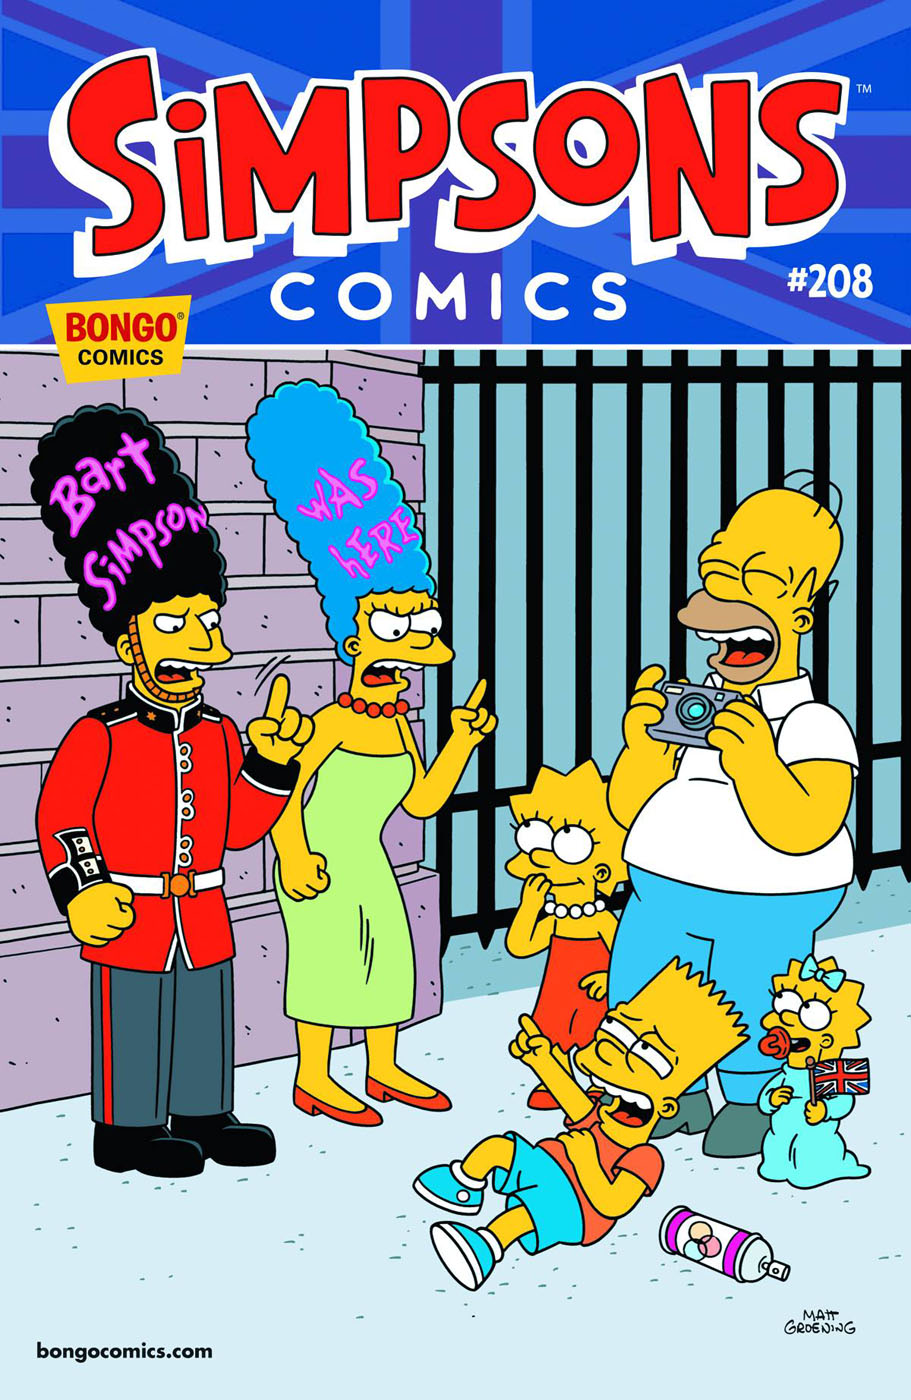 http://simpsonswiki.com/w/images/c/ce/Simpsons_Comics_208.jpg